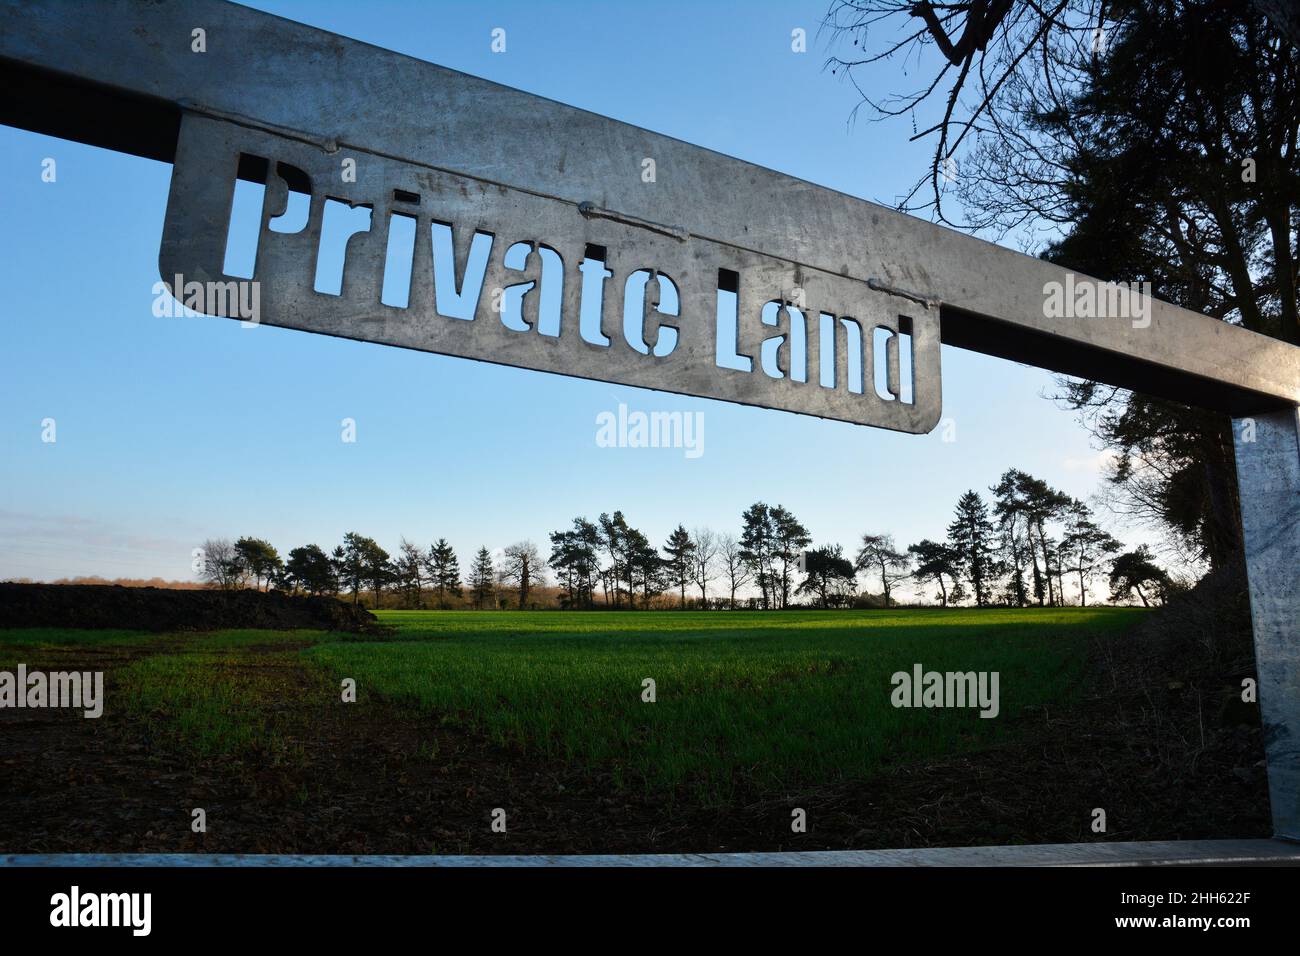 A sign warning of private land ownership, Harrington, Northamptonshire, UK. Stock Photo